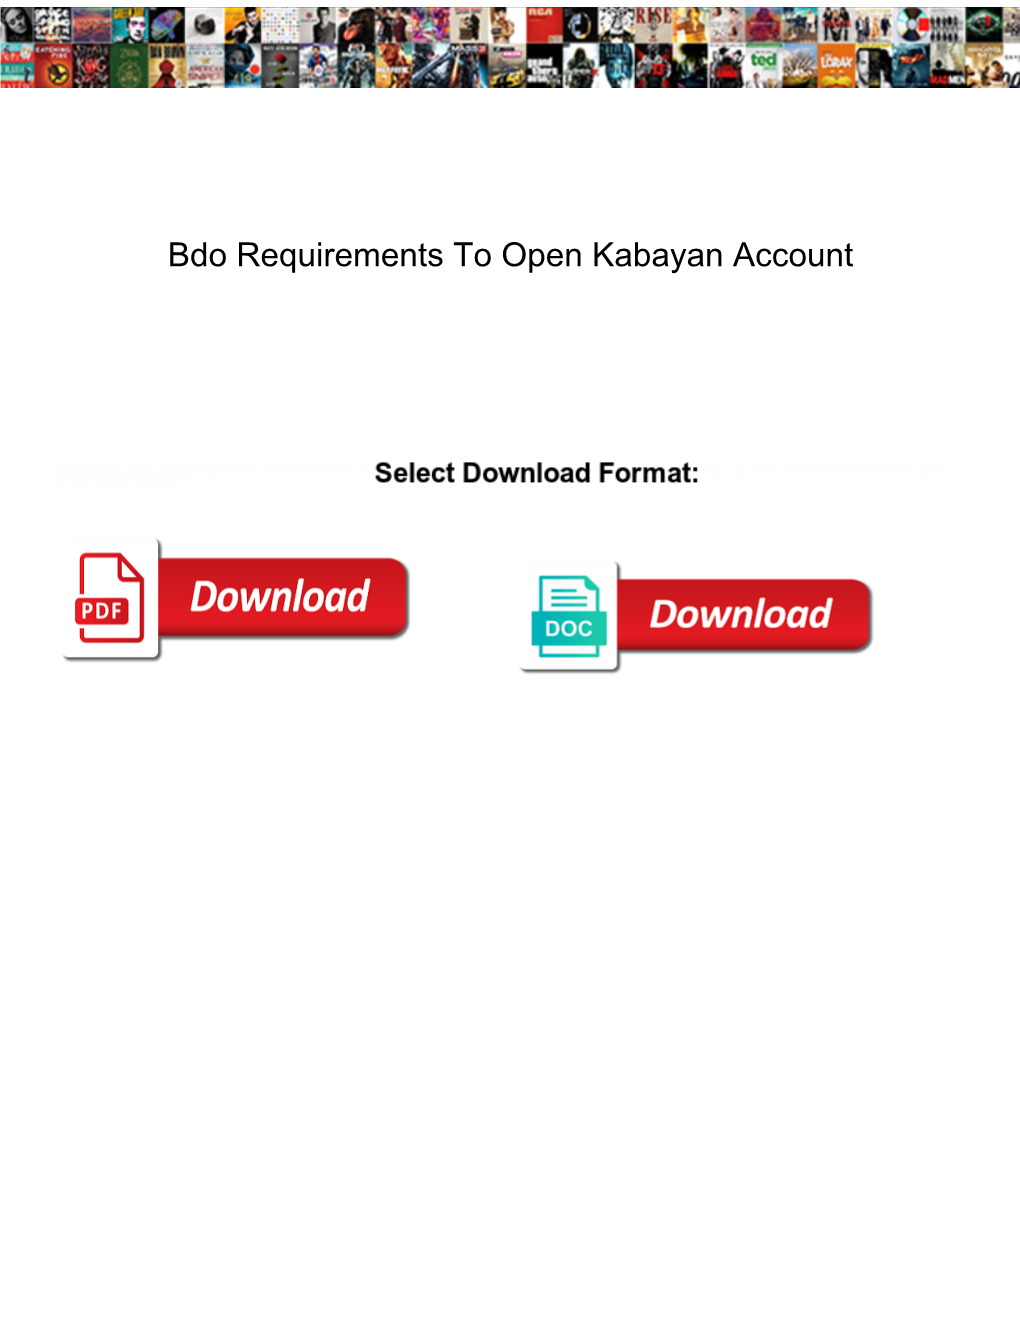 Bdo Requirements to Open Kabayan Account